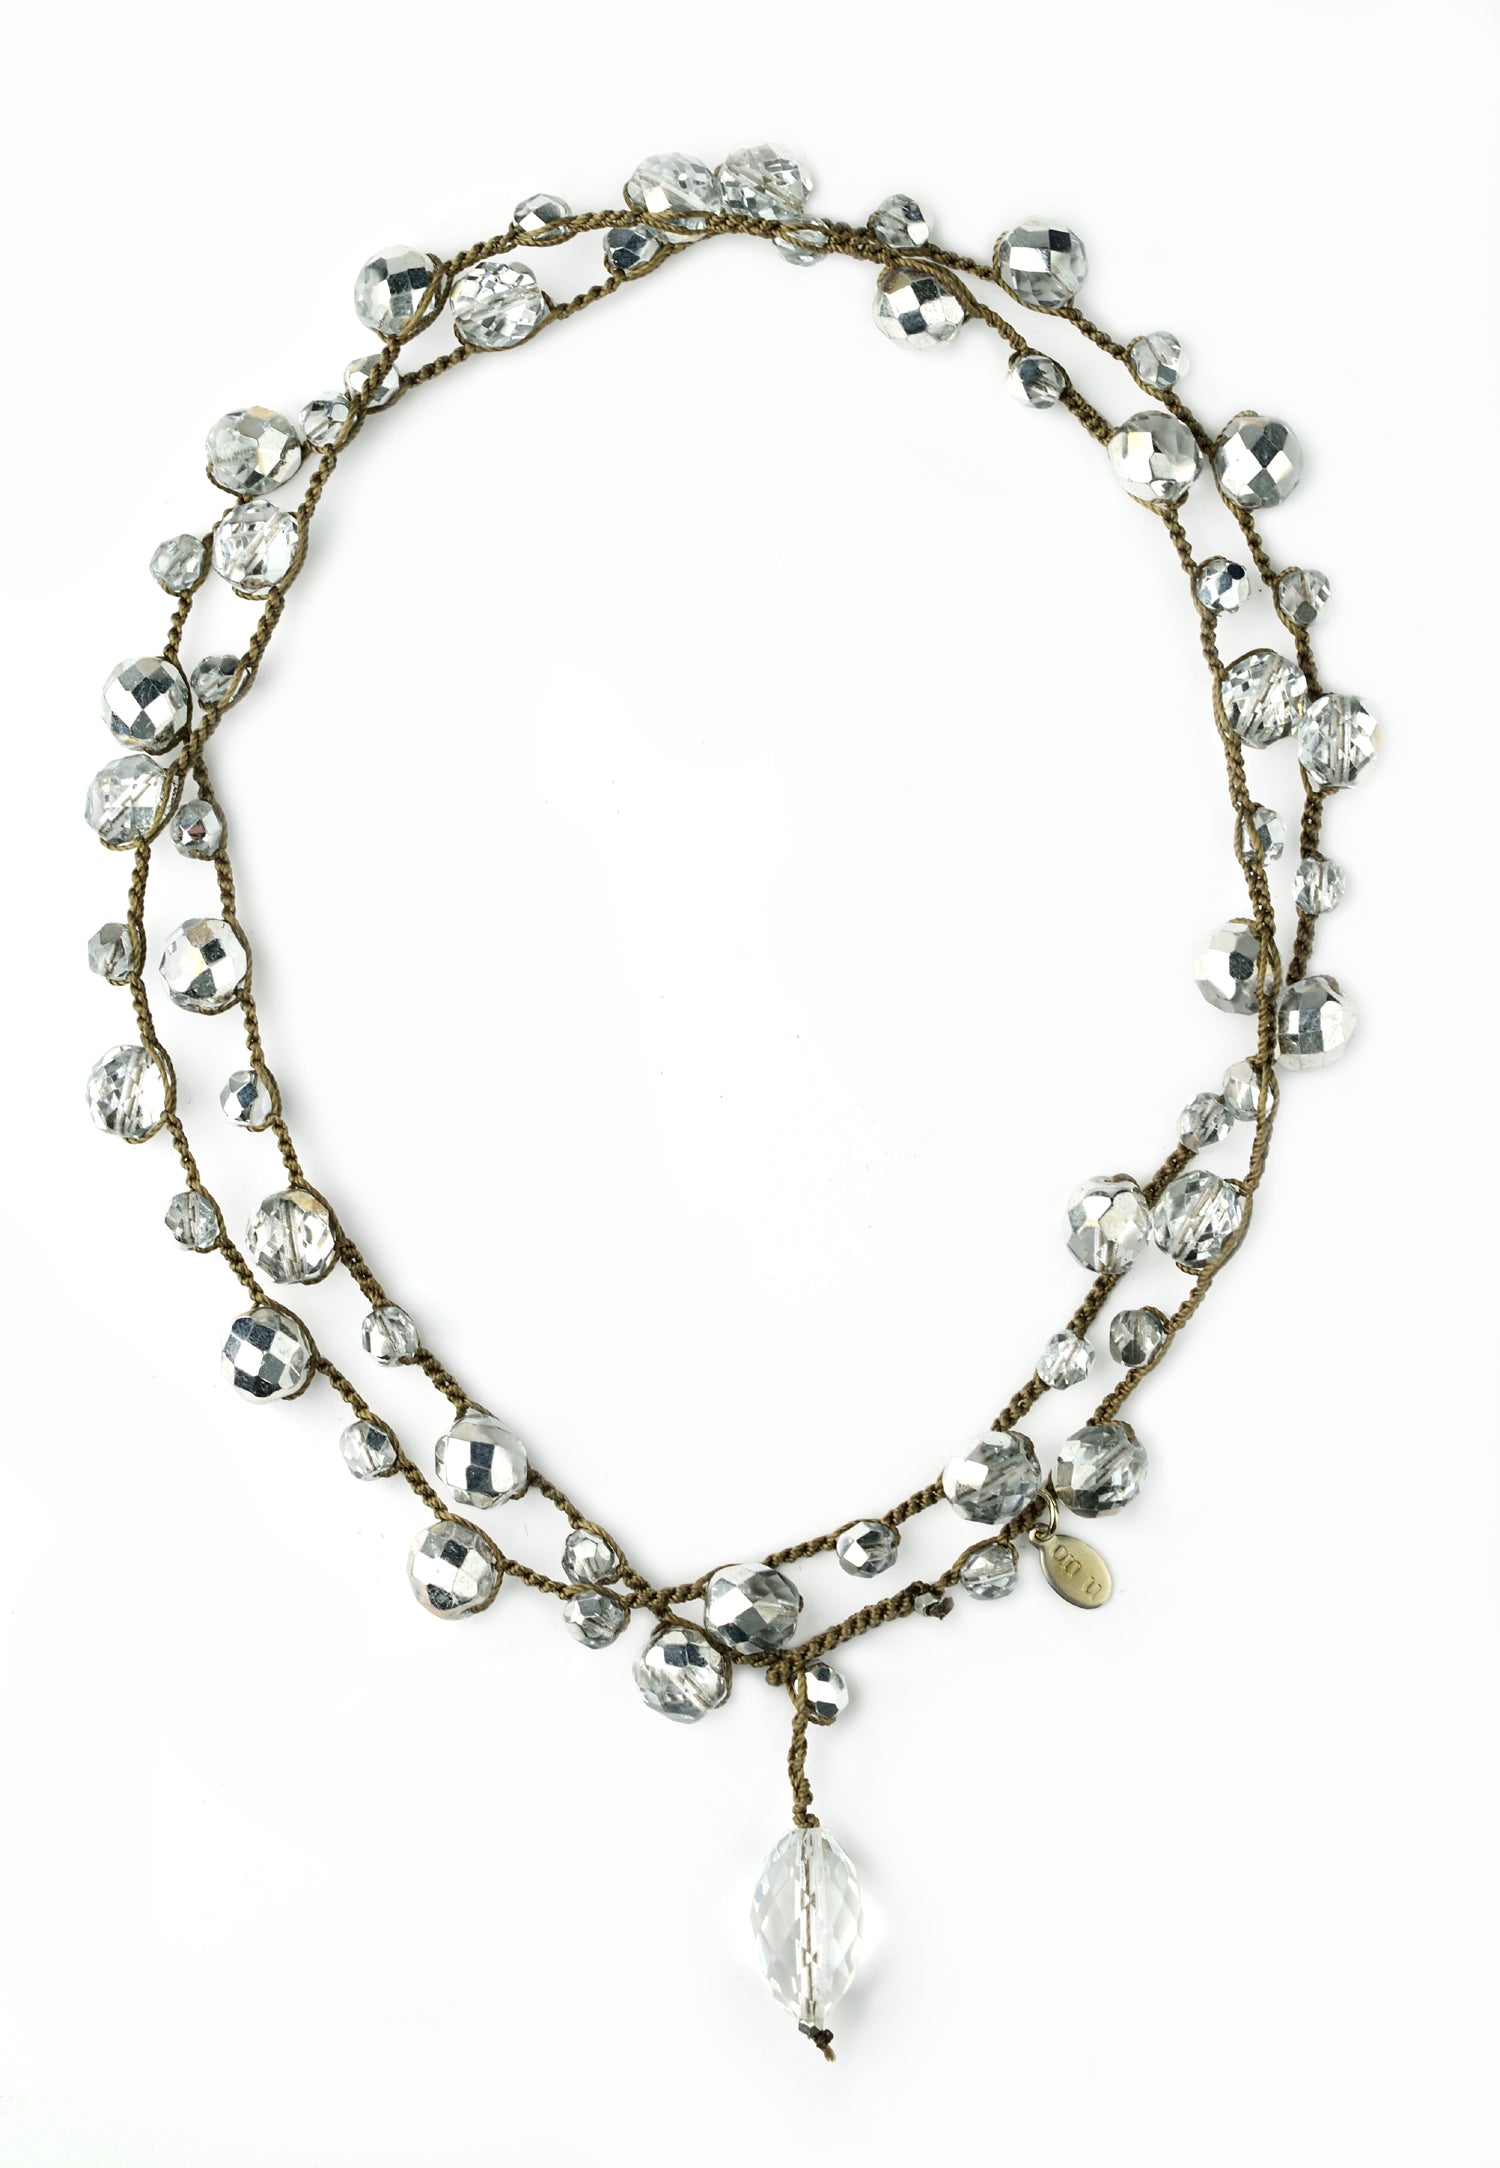 onujewelry.com - Michelle Neckace in Silver. Handmade by Donna SIlvestri, On U Jewelry, RIchmond, VA